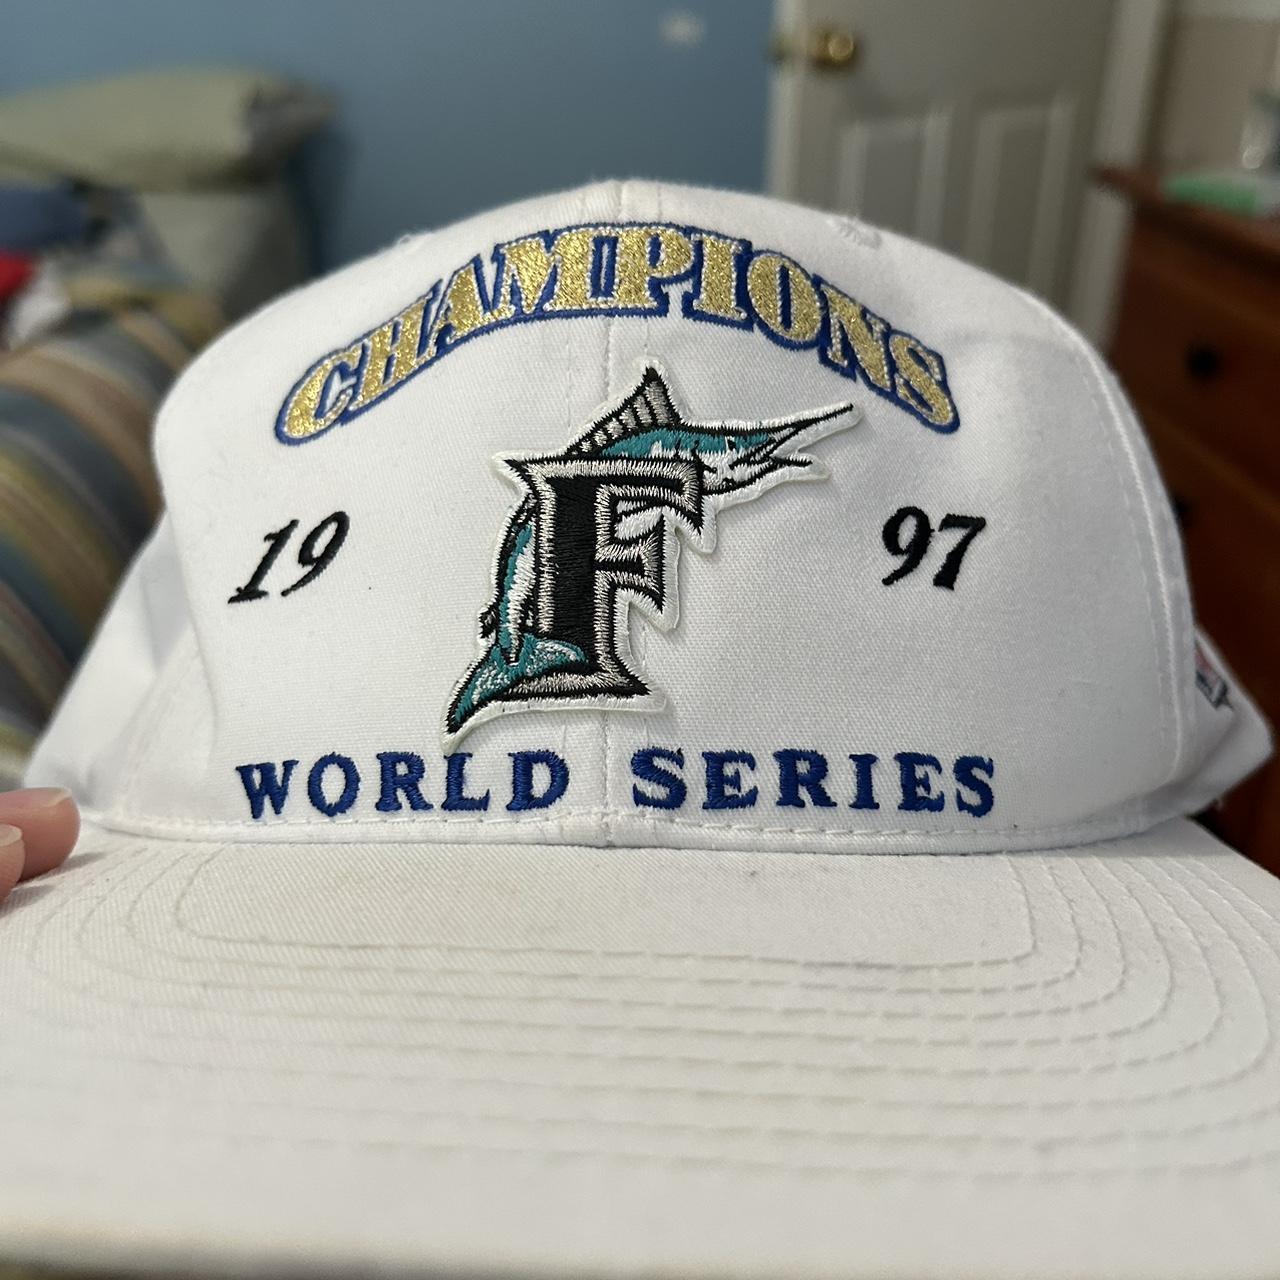 Yankees vs Marlins World Series championship hat - Depop